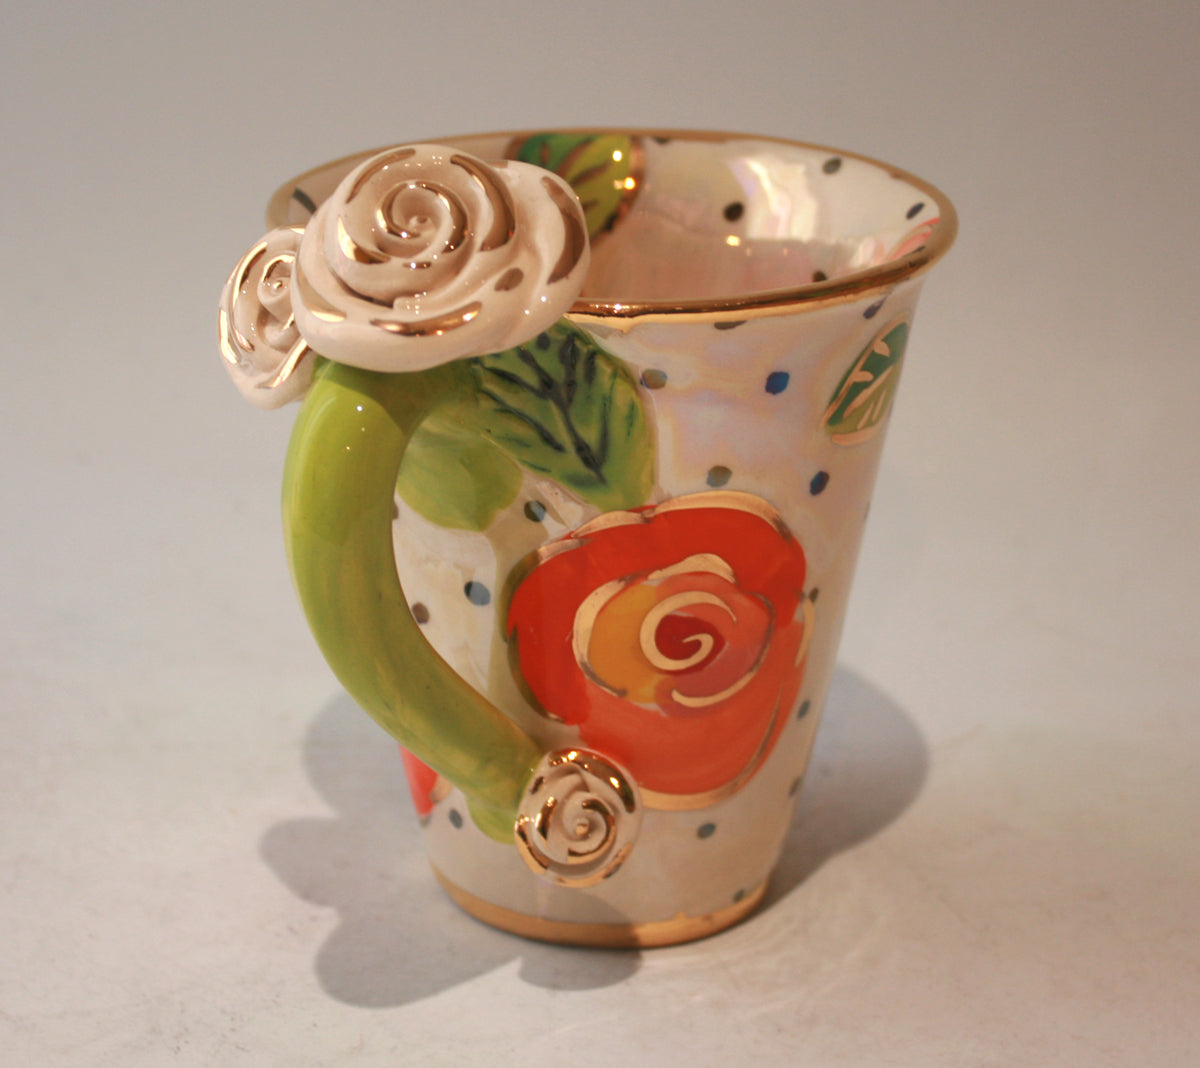 Rose Handled New Shape Large Mug in Orange Gold New Rose Polka